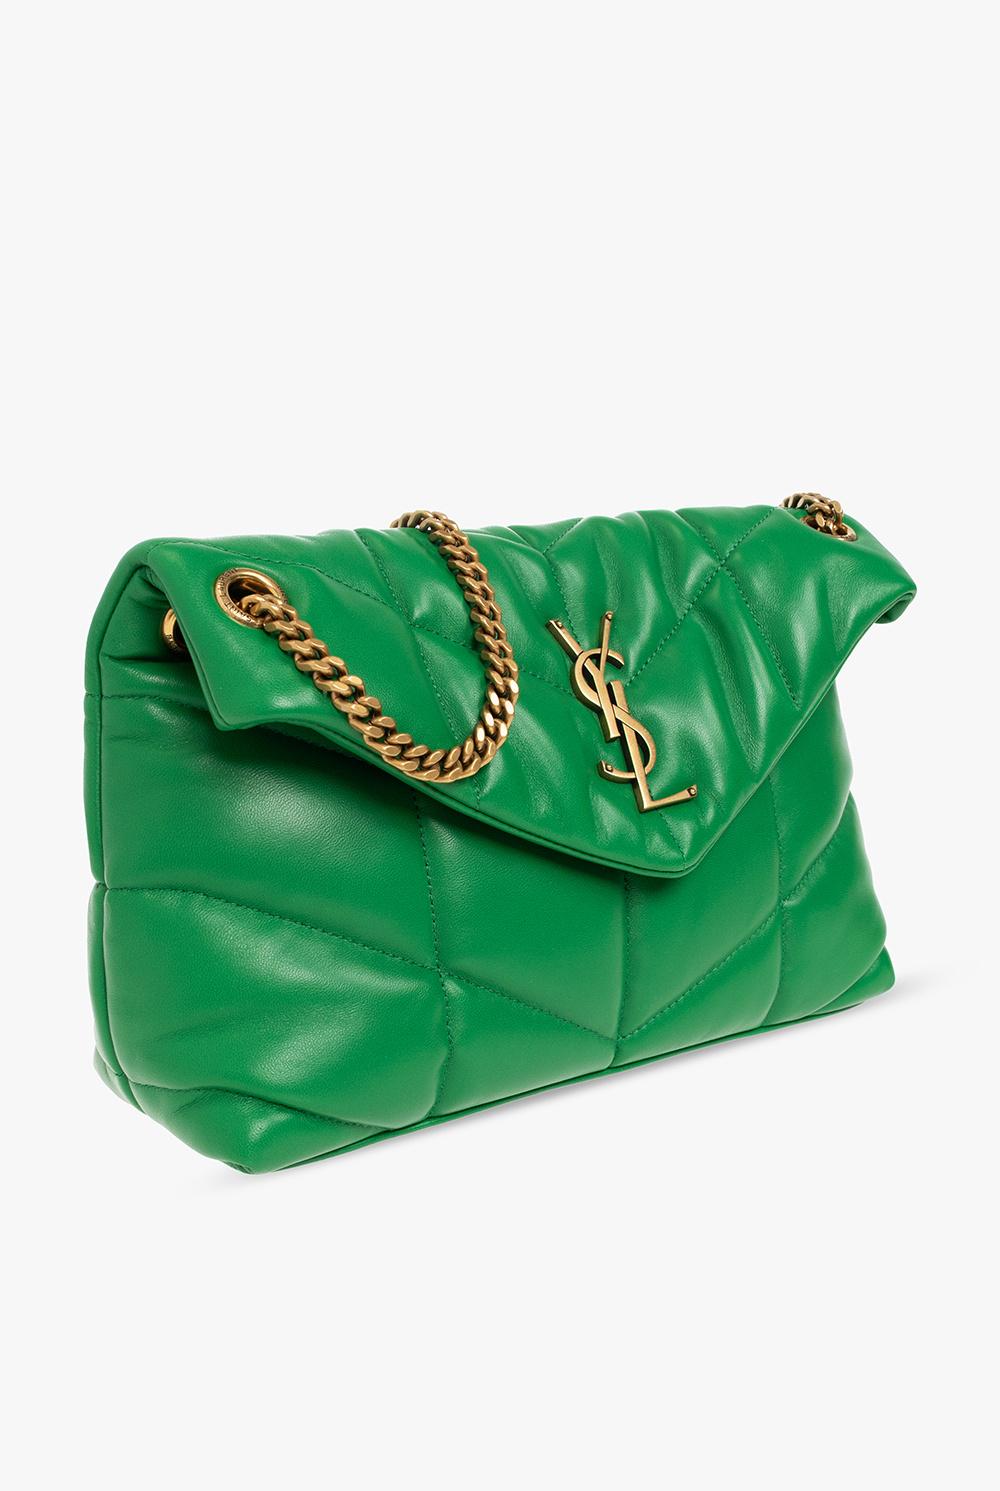 Saint Laurent Loulou Puffer Mini Leather Shoulder Bag in Green